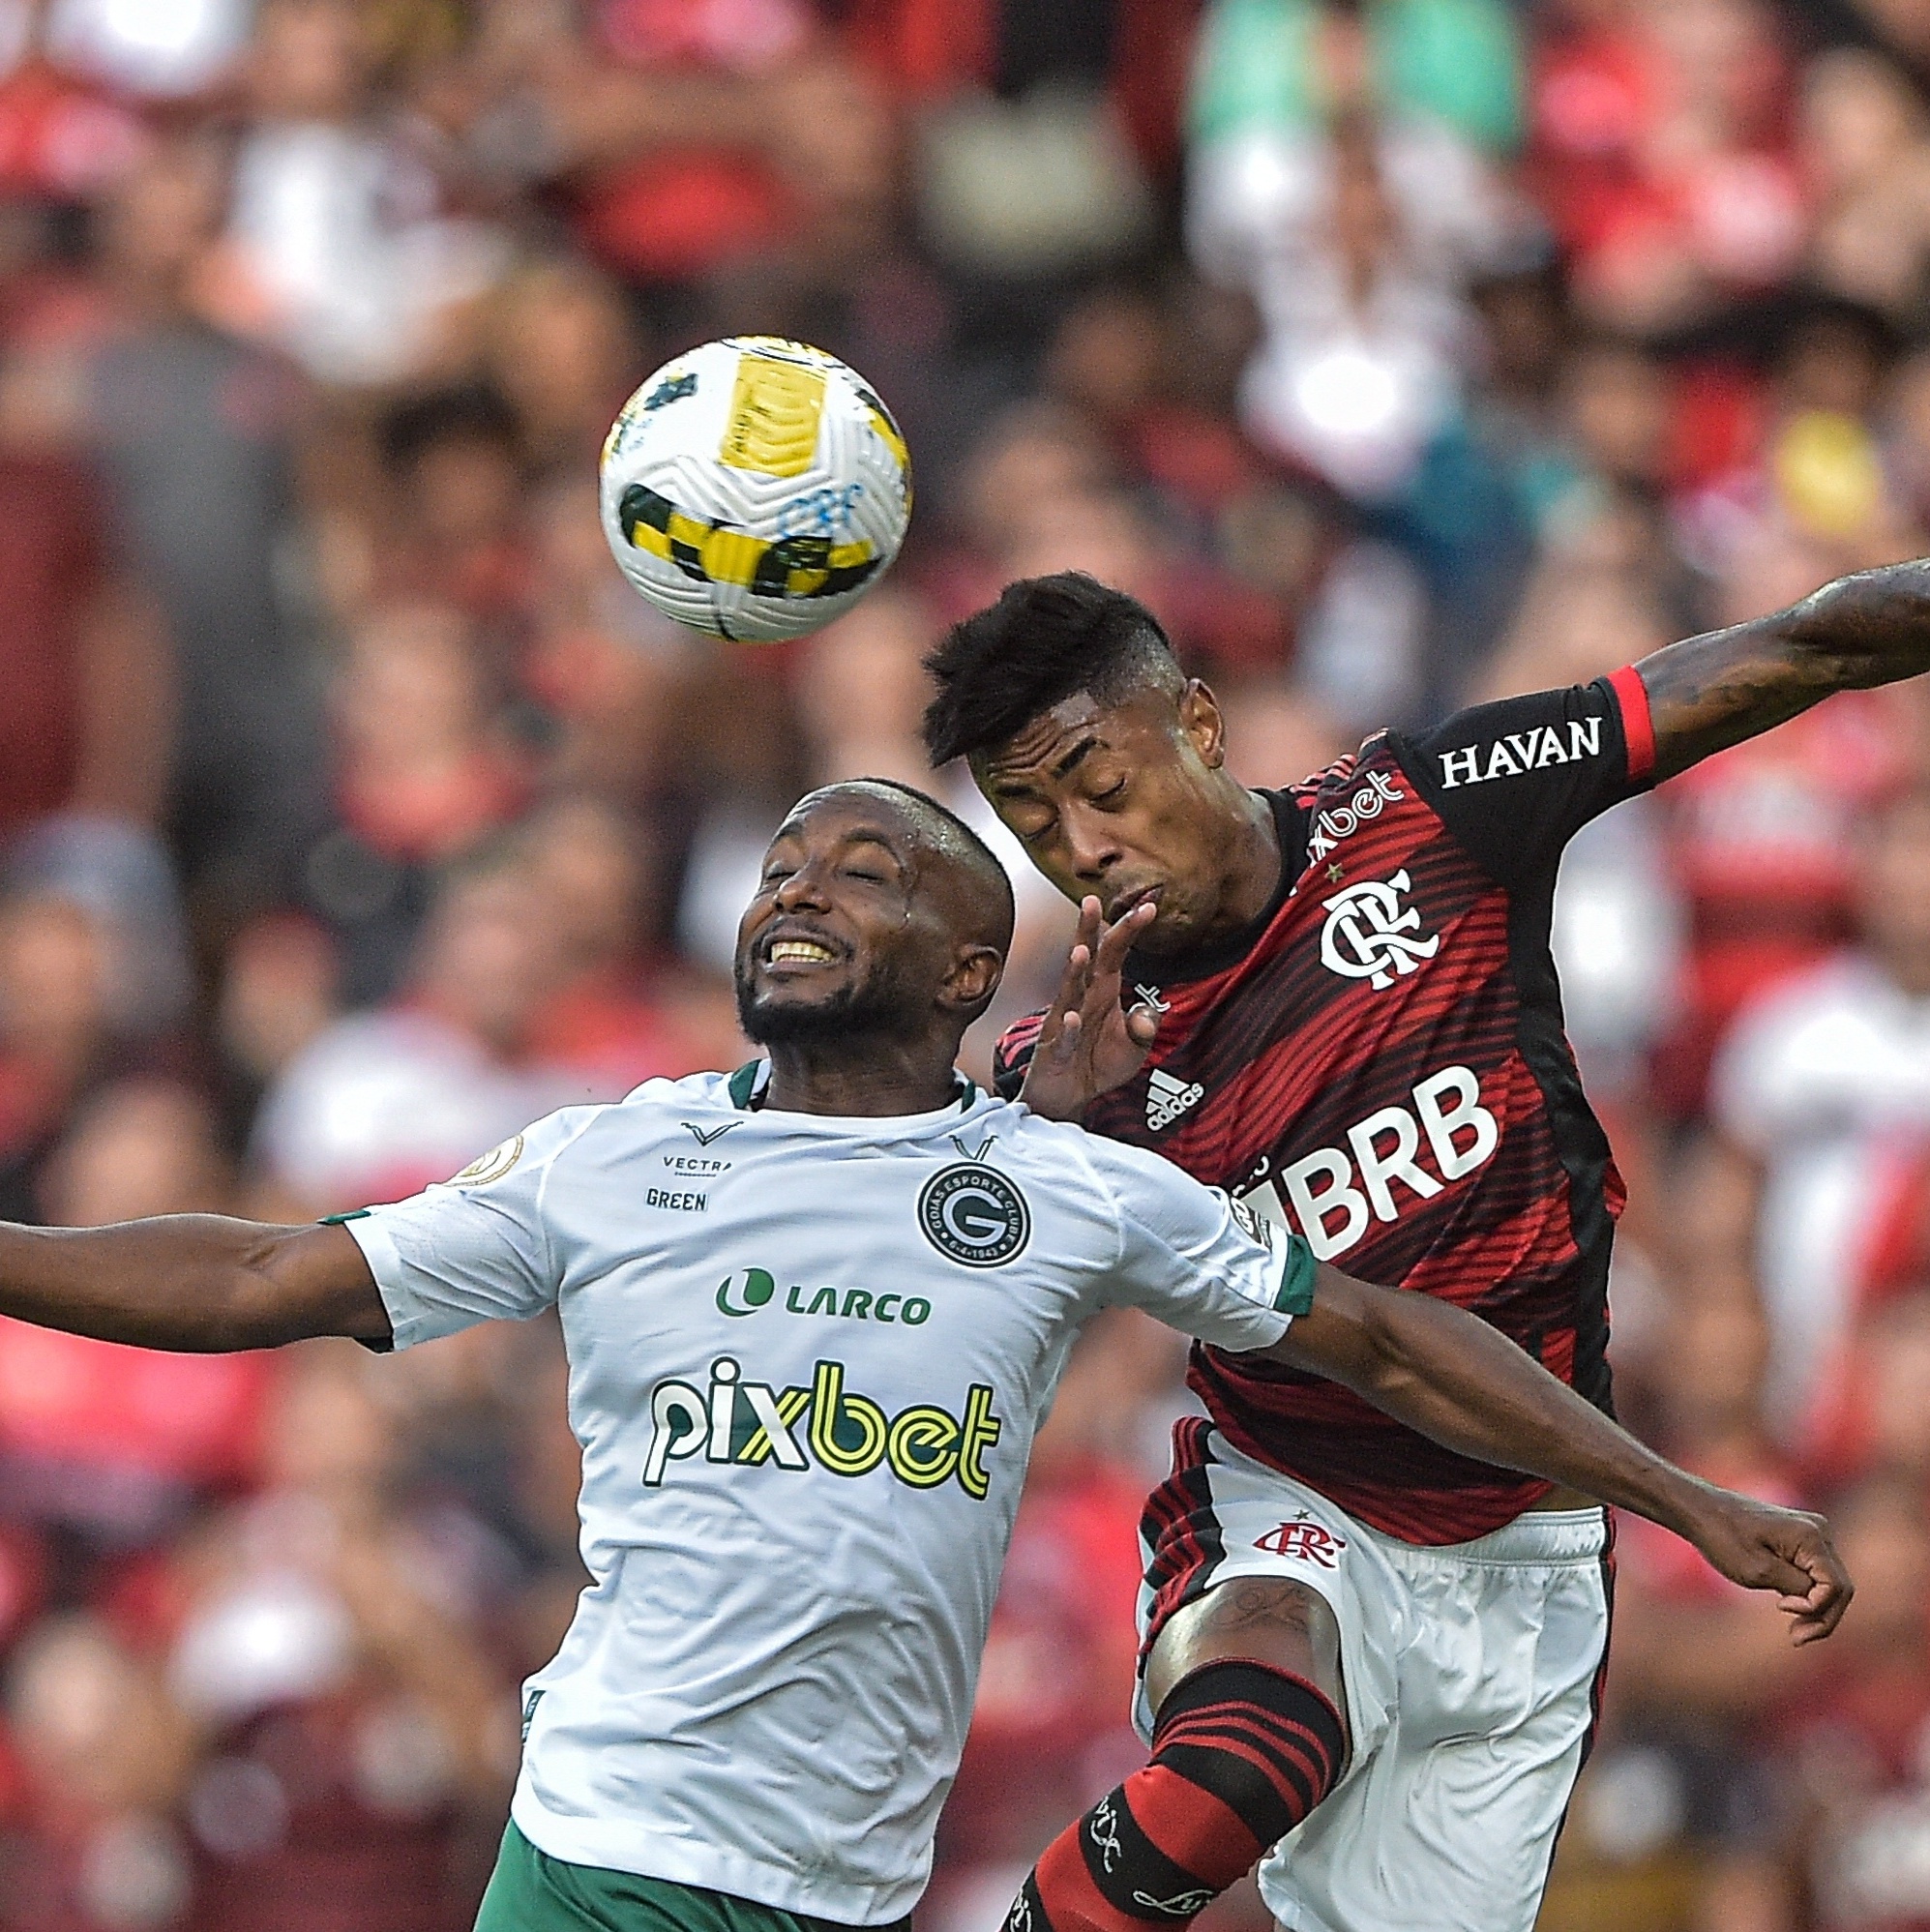 Assistir Flamengo x Goiás online - Futebol Bahiano